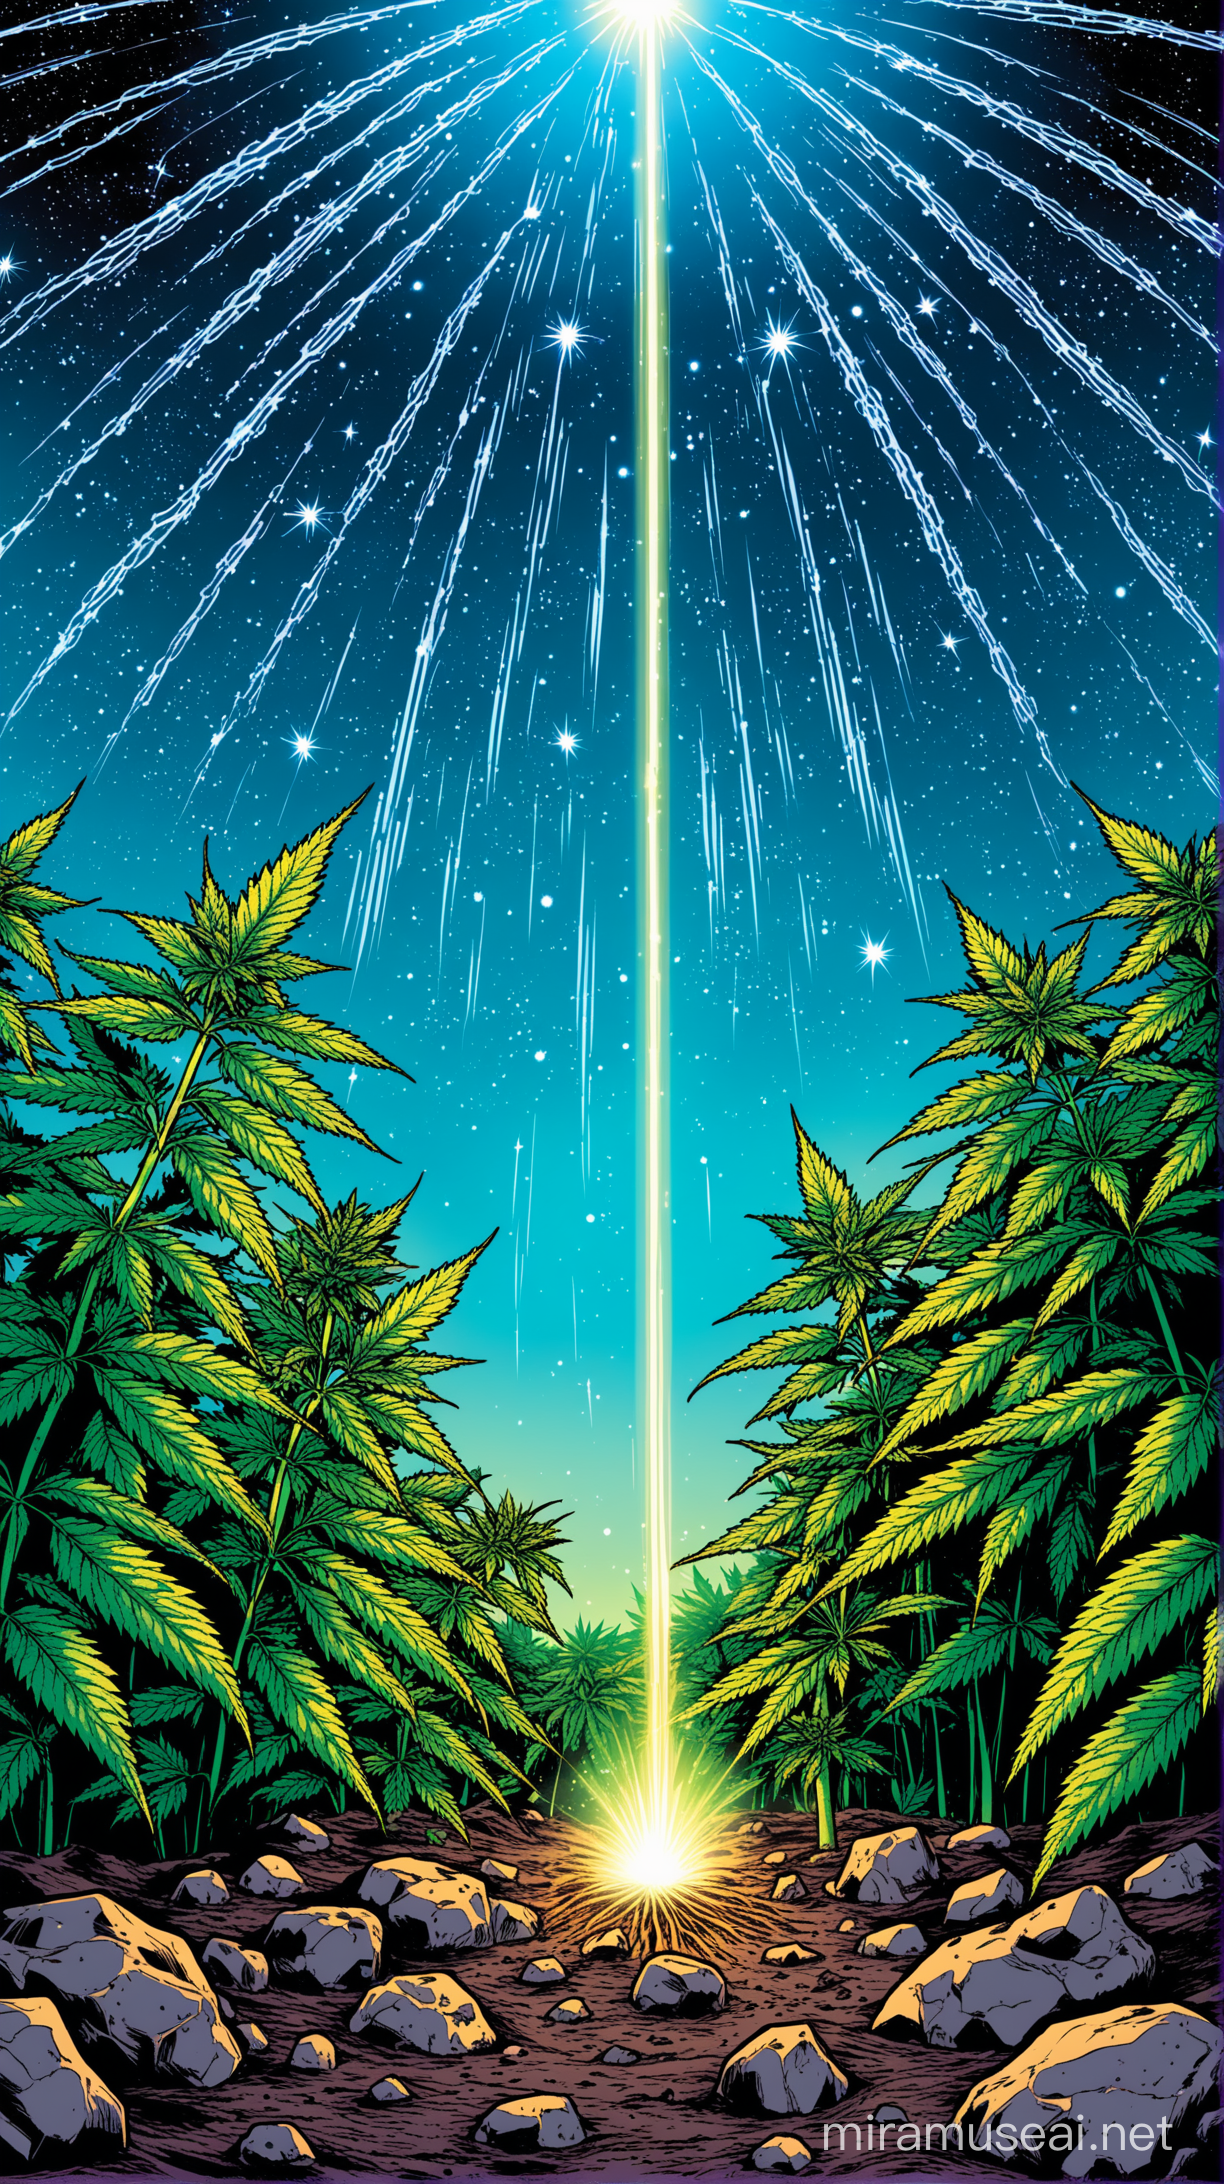 Cosmic Energy Illuminated Marijuana Plants Meteor Shower Effect in Comic Book Art